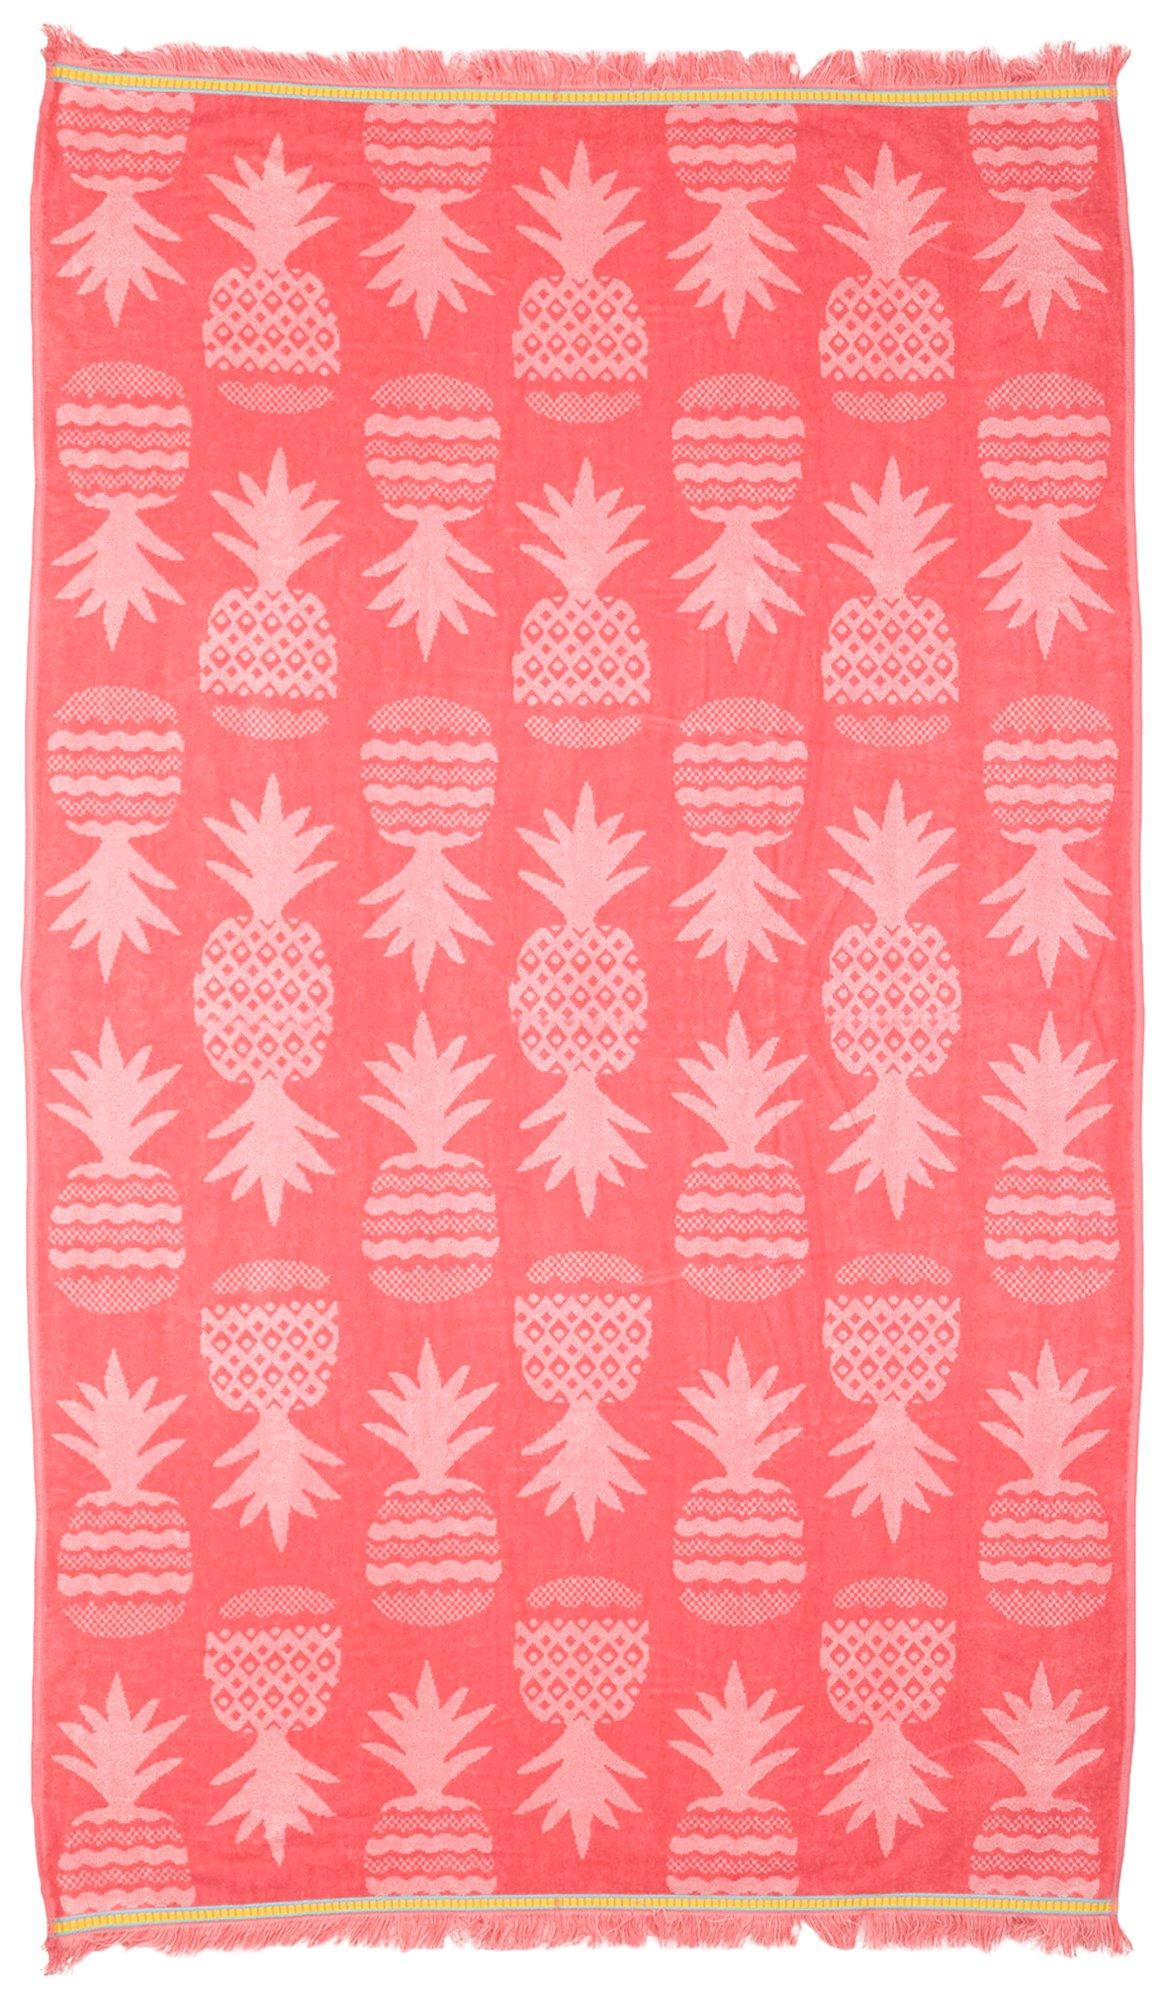 36x68 Pineapples Beach Towel